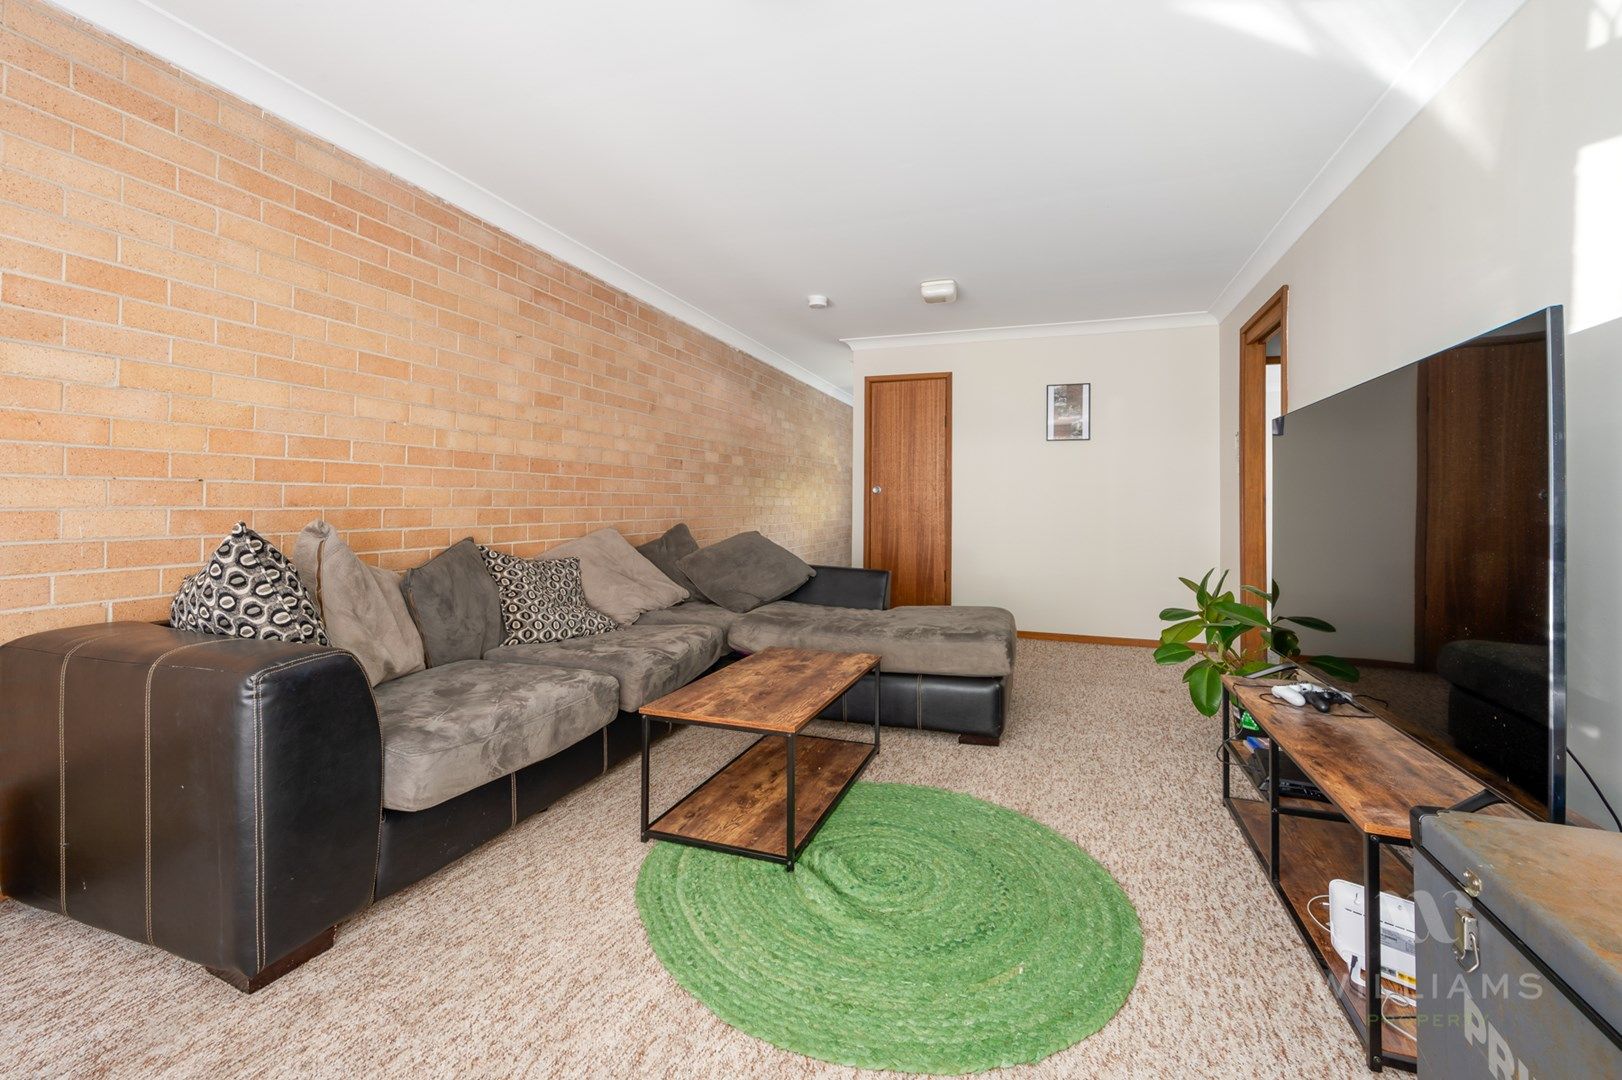 2 bedrooms Apartment / Unit / Flat in 4/15 Willcox Avenue SINGLETON NSW, 2330